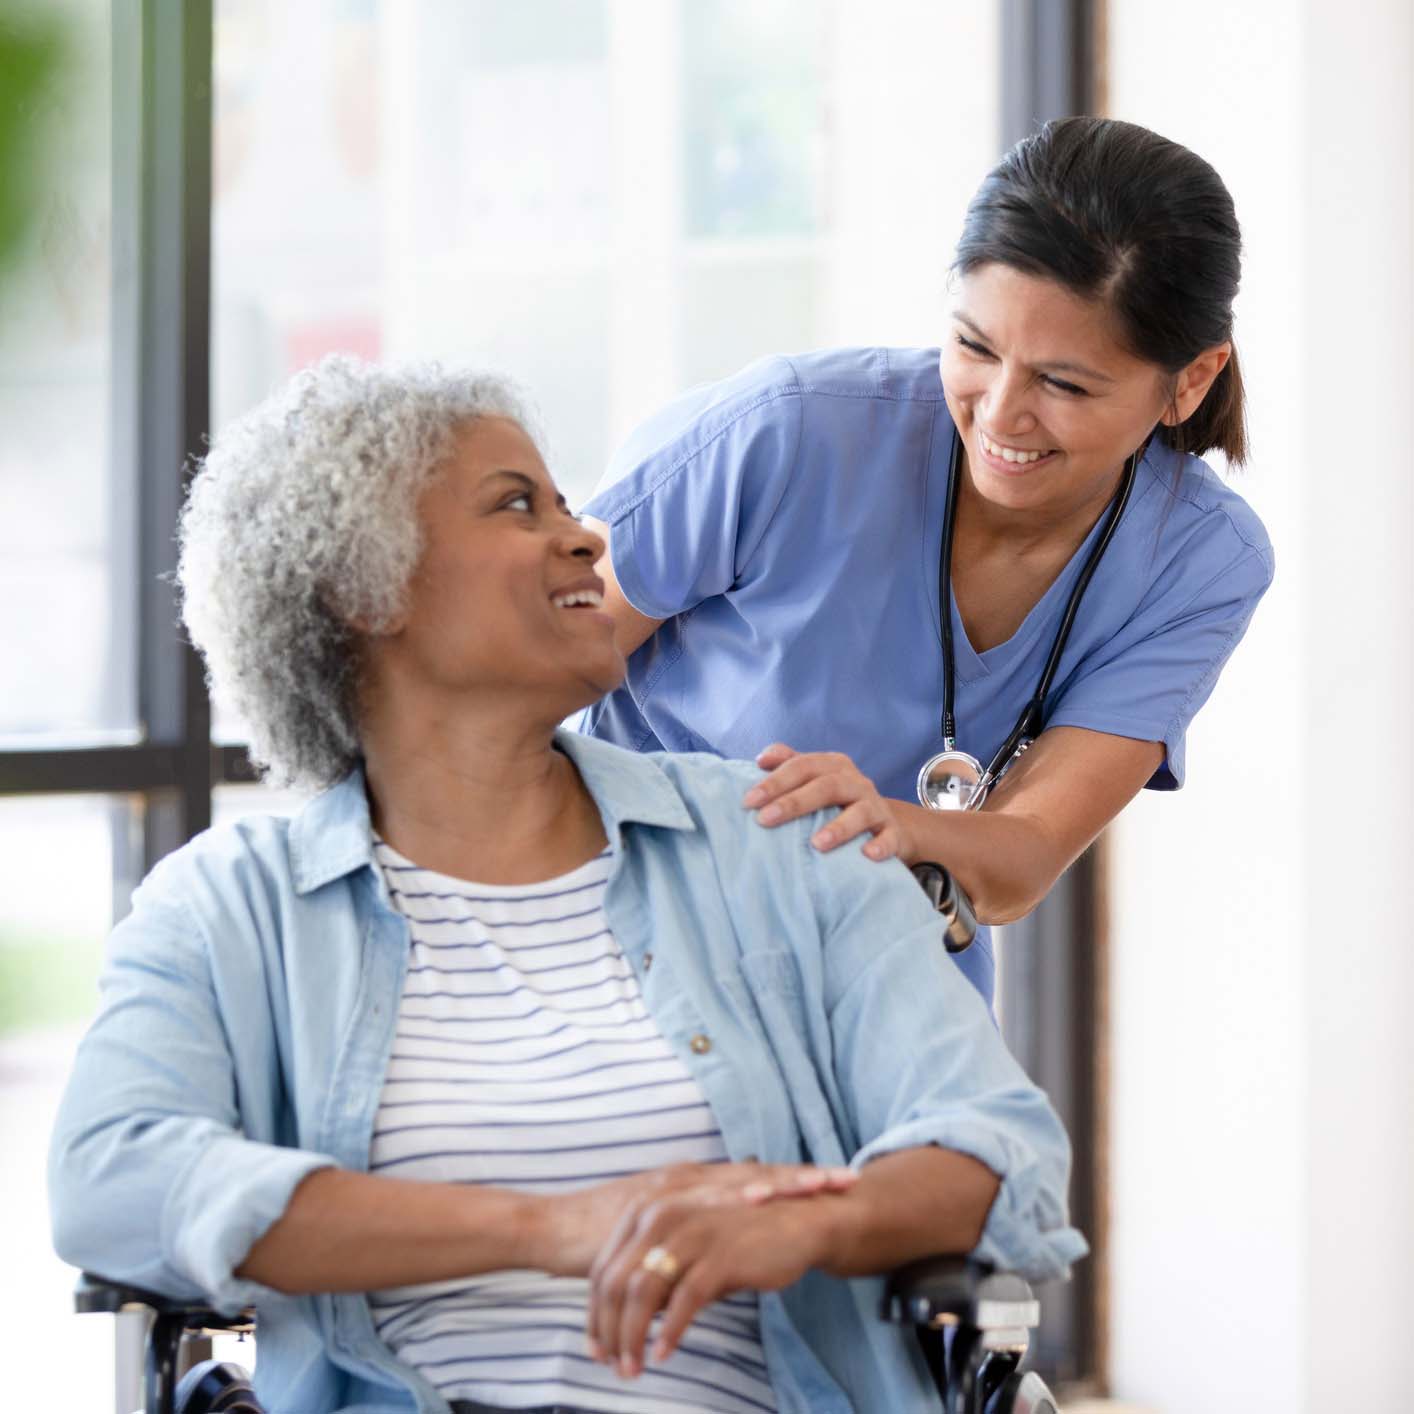 nurse with an elderly woman